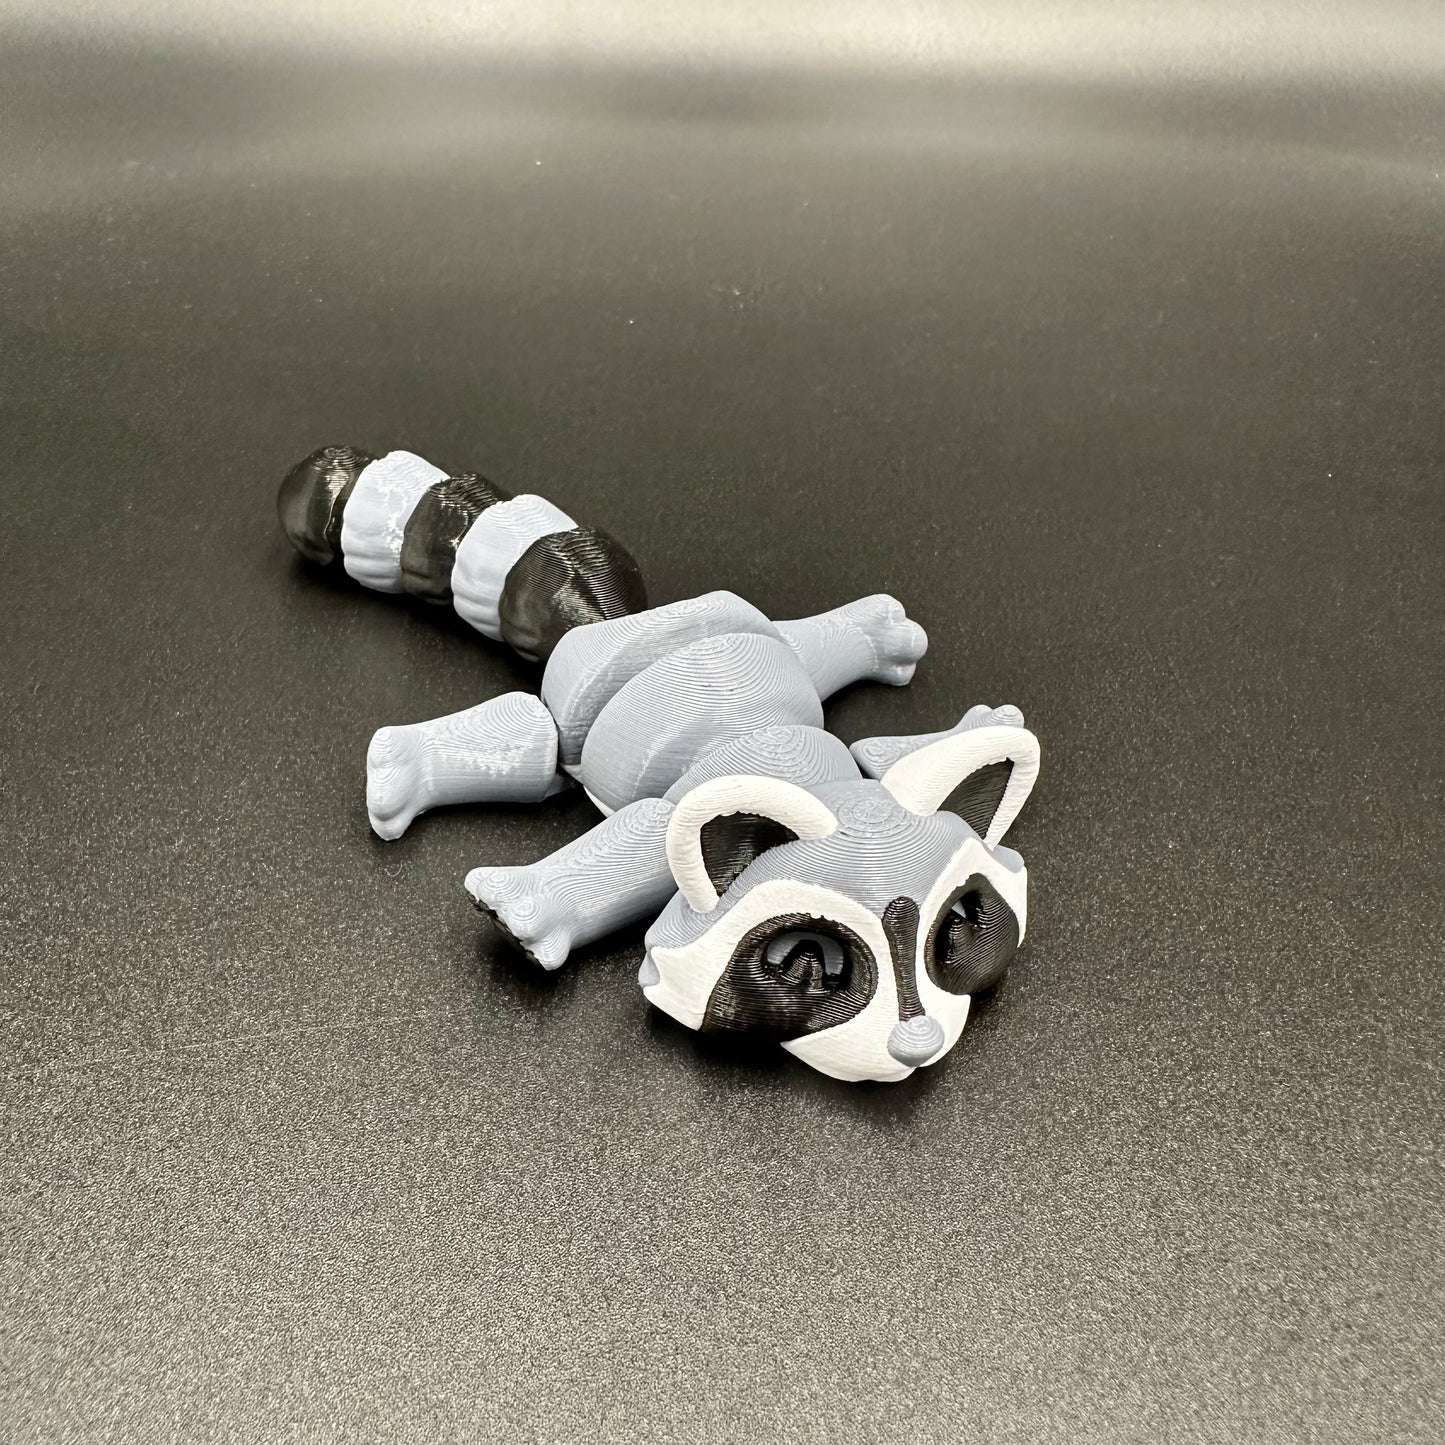 3D Printed Trash Panda Raccoon